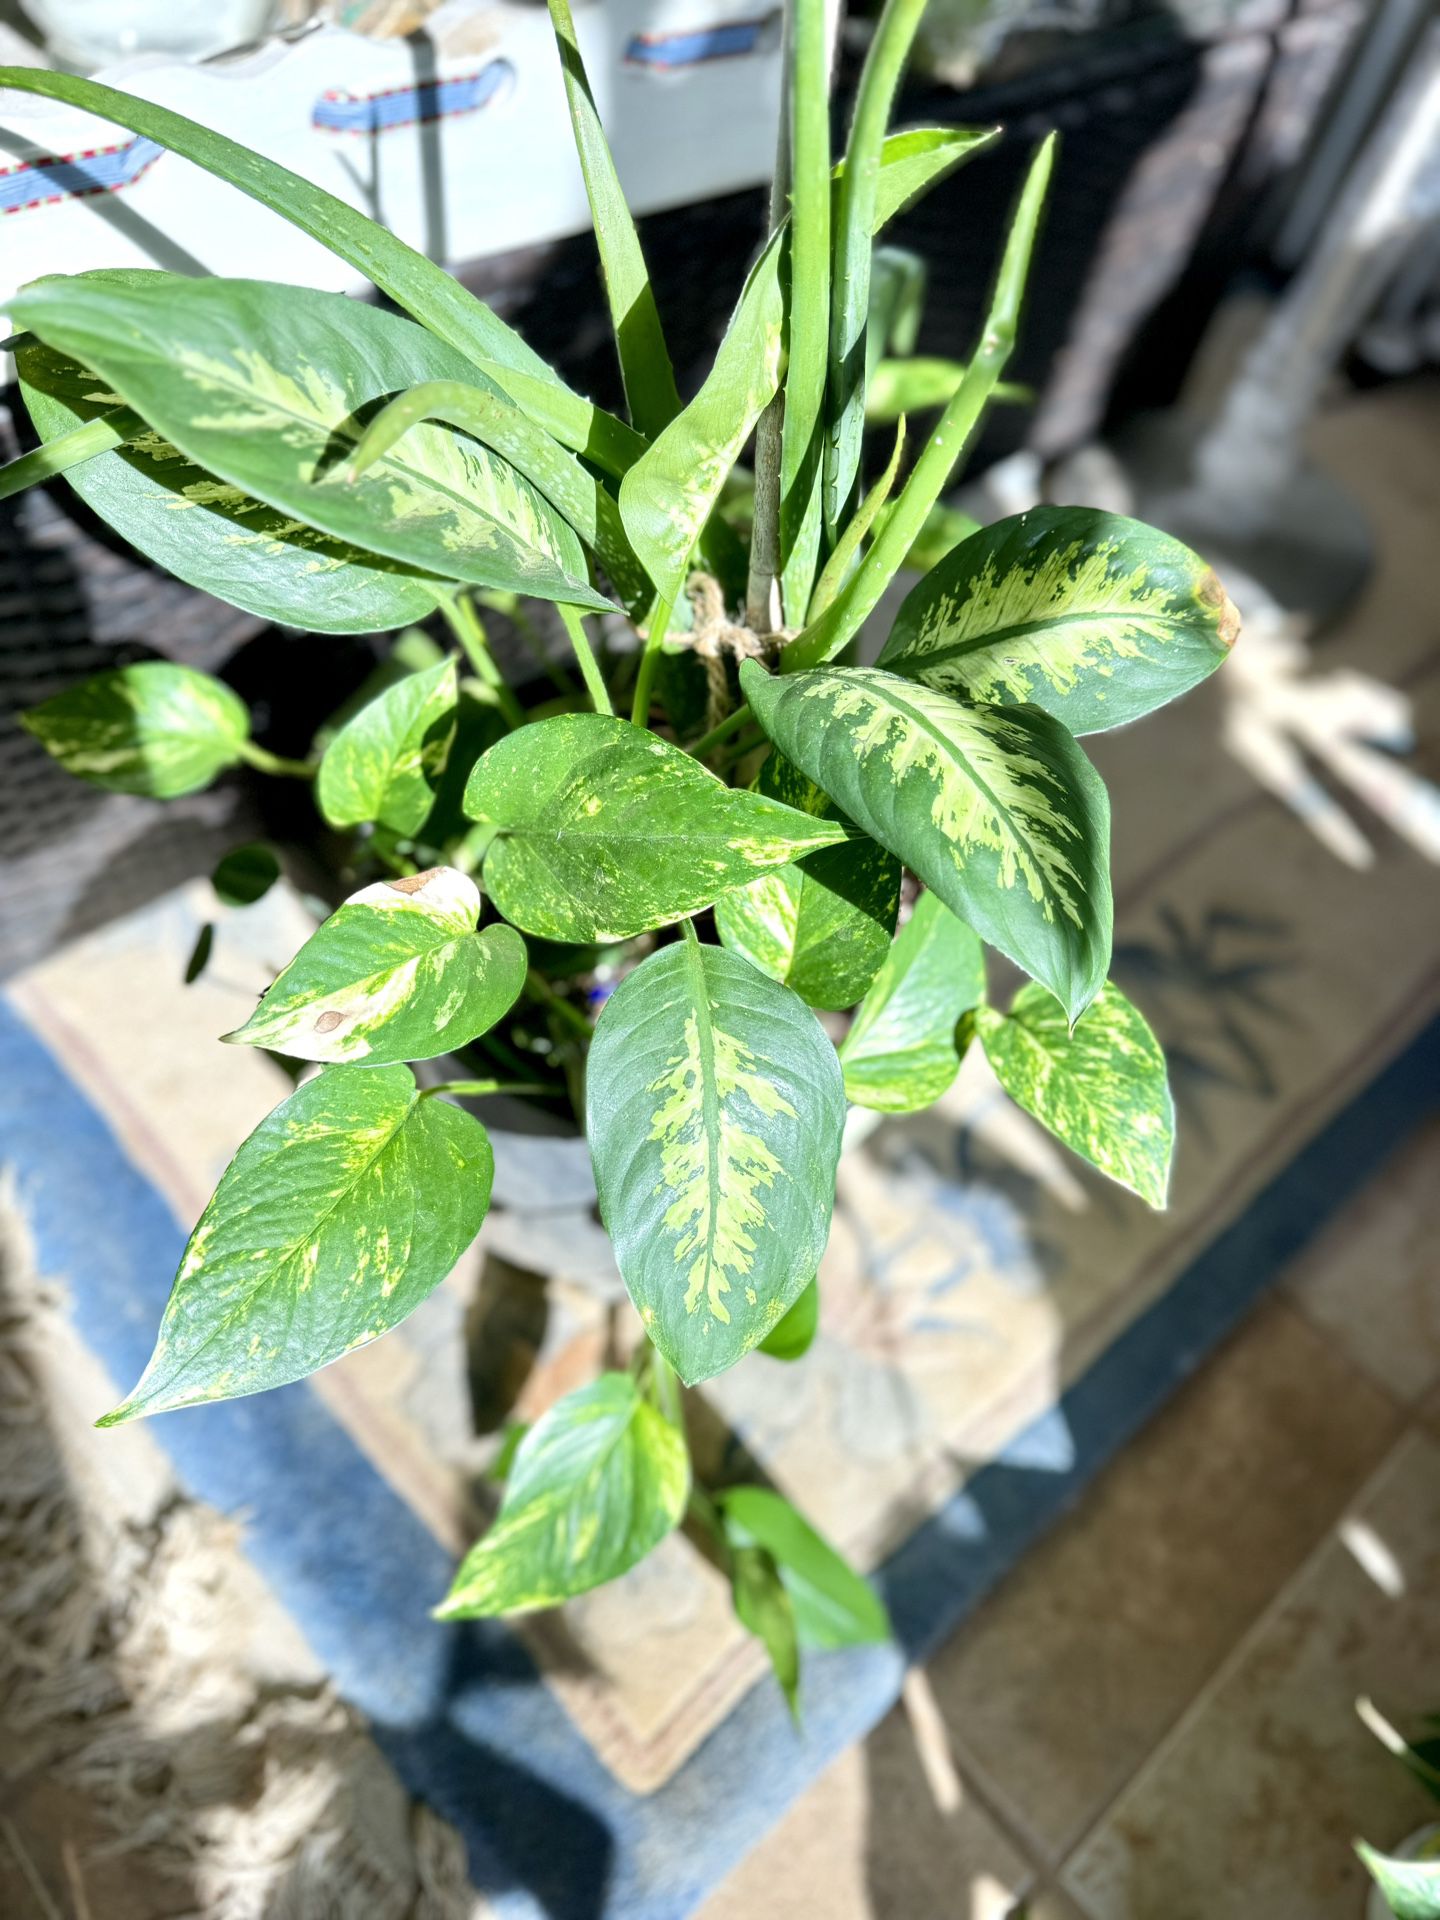 Large Dieffenbachia Indoor Plants In Gallon Pot